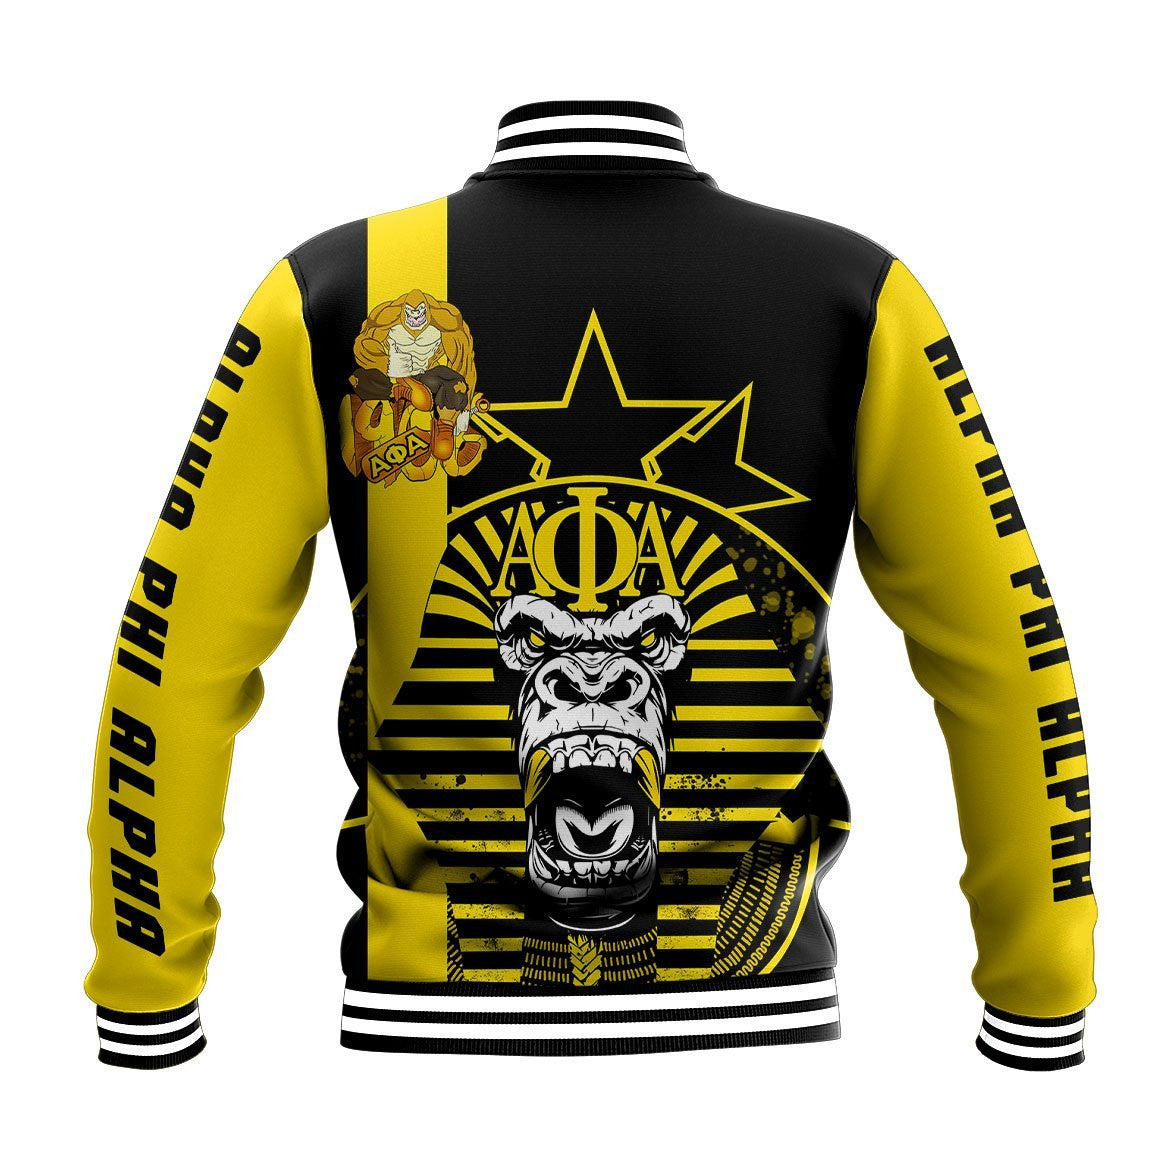 Fraternity Jacket - King Kong Alpha Phi Alpha Baseball Jacket9